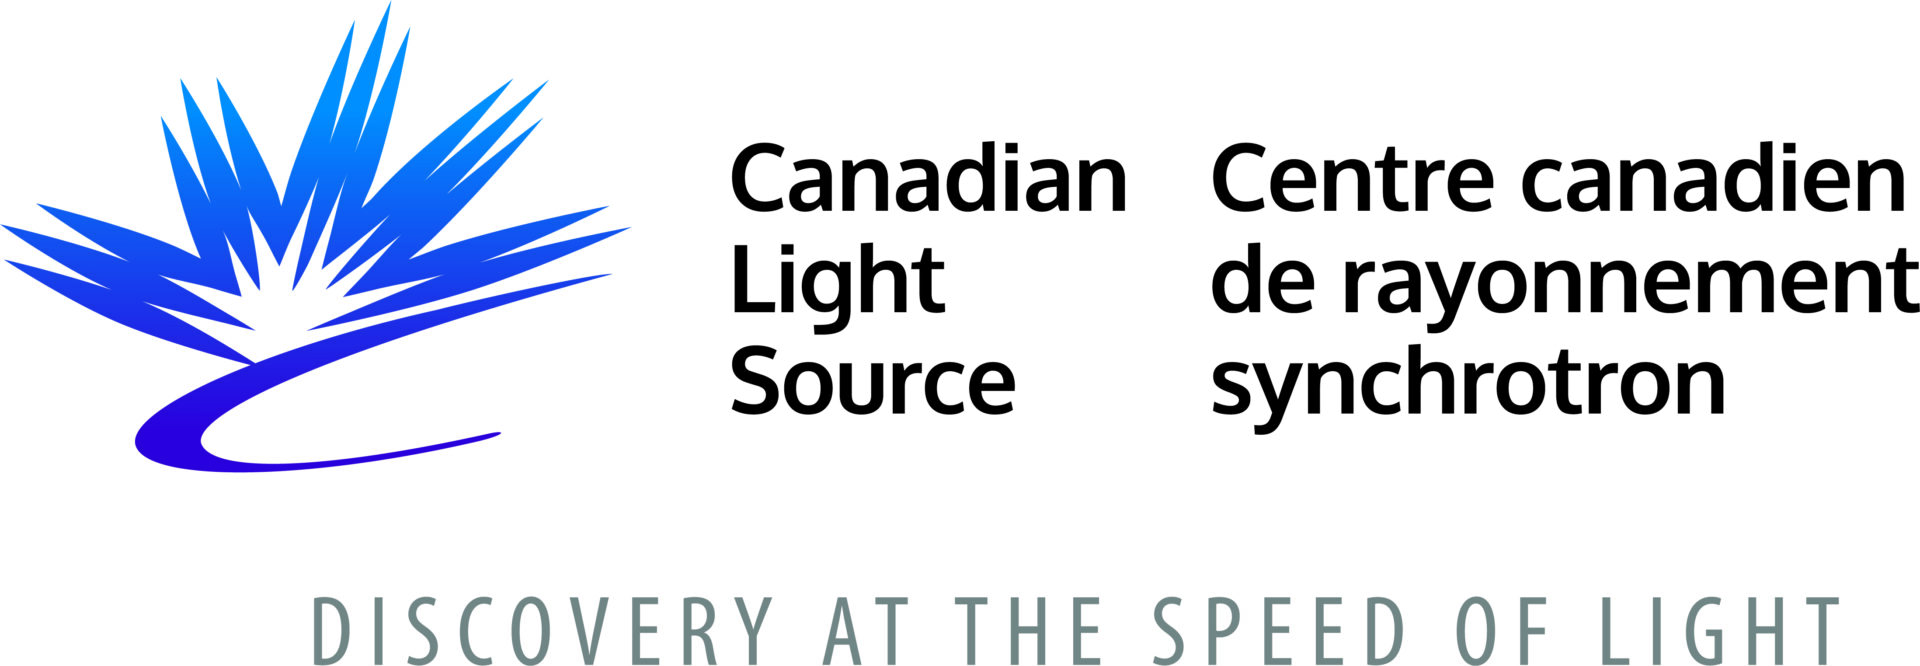 Logo de la Source lumineuse canadienne